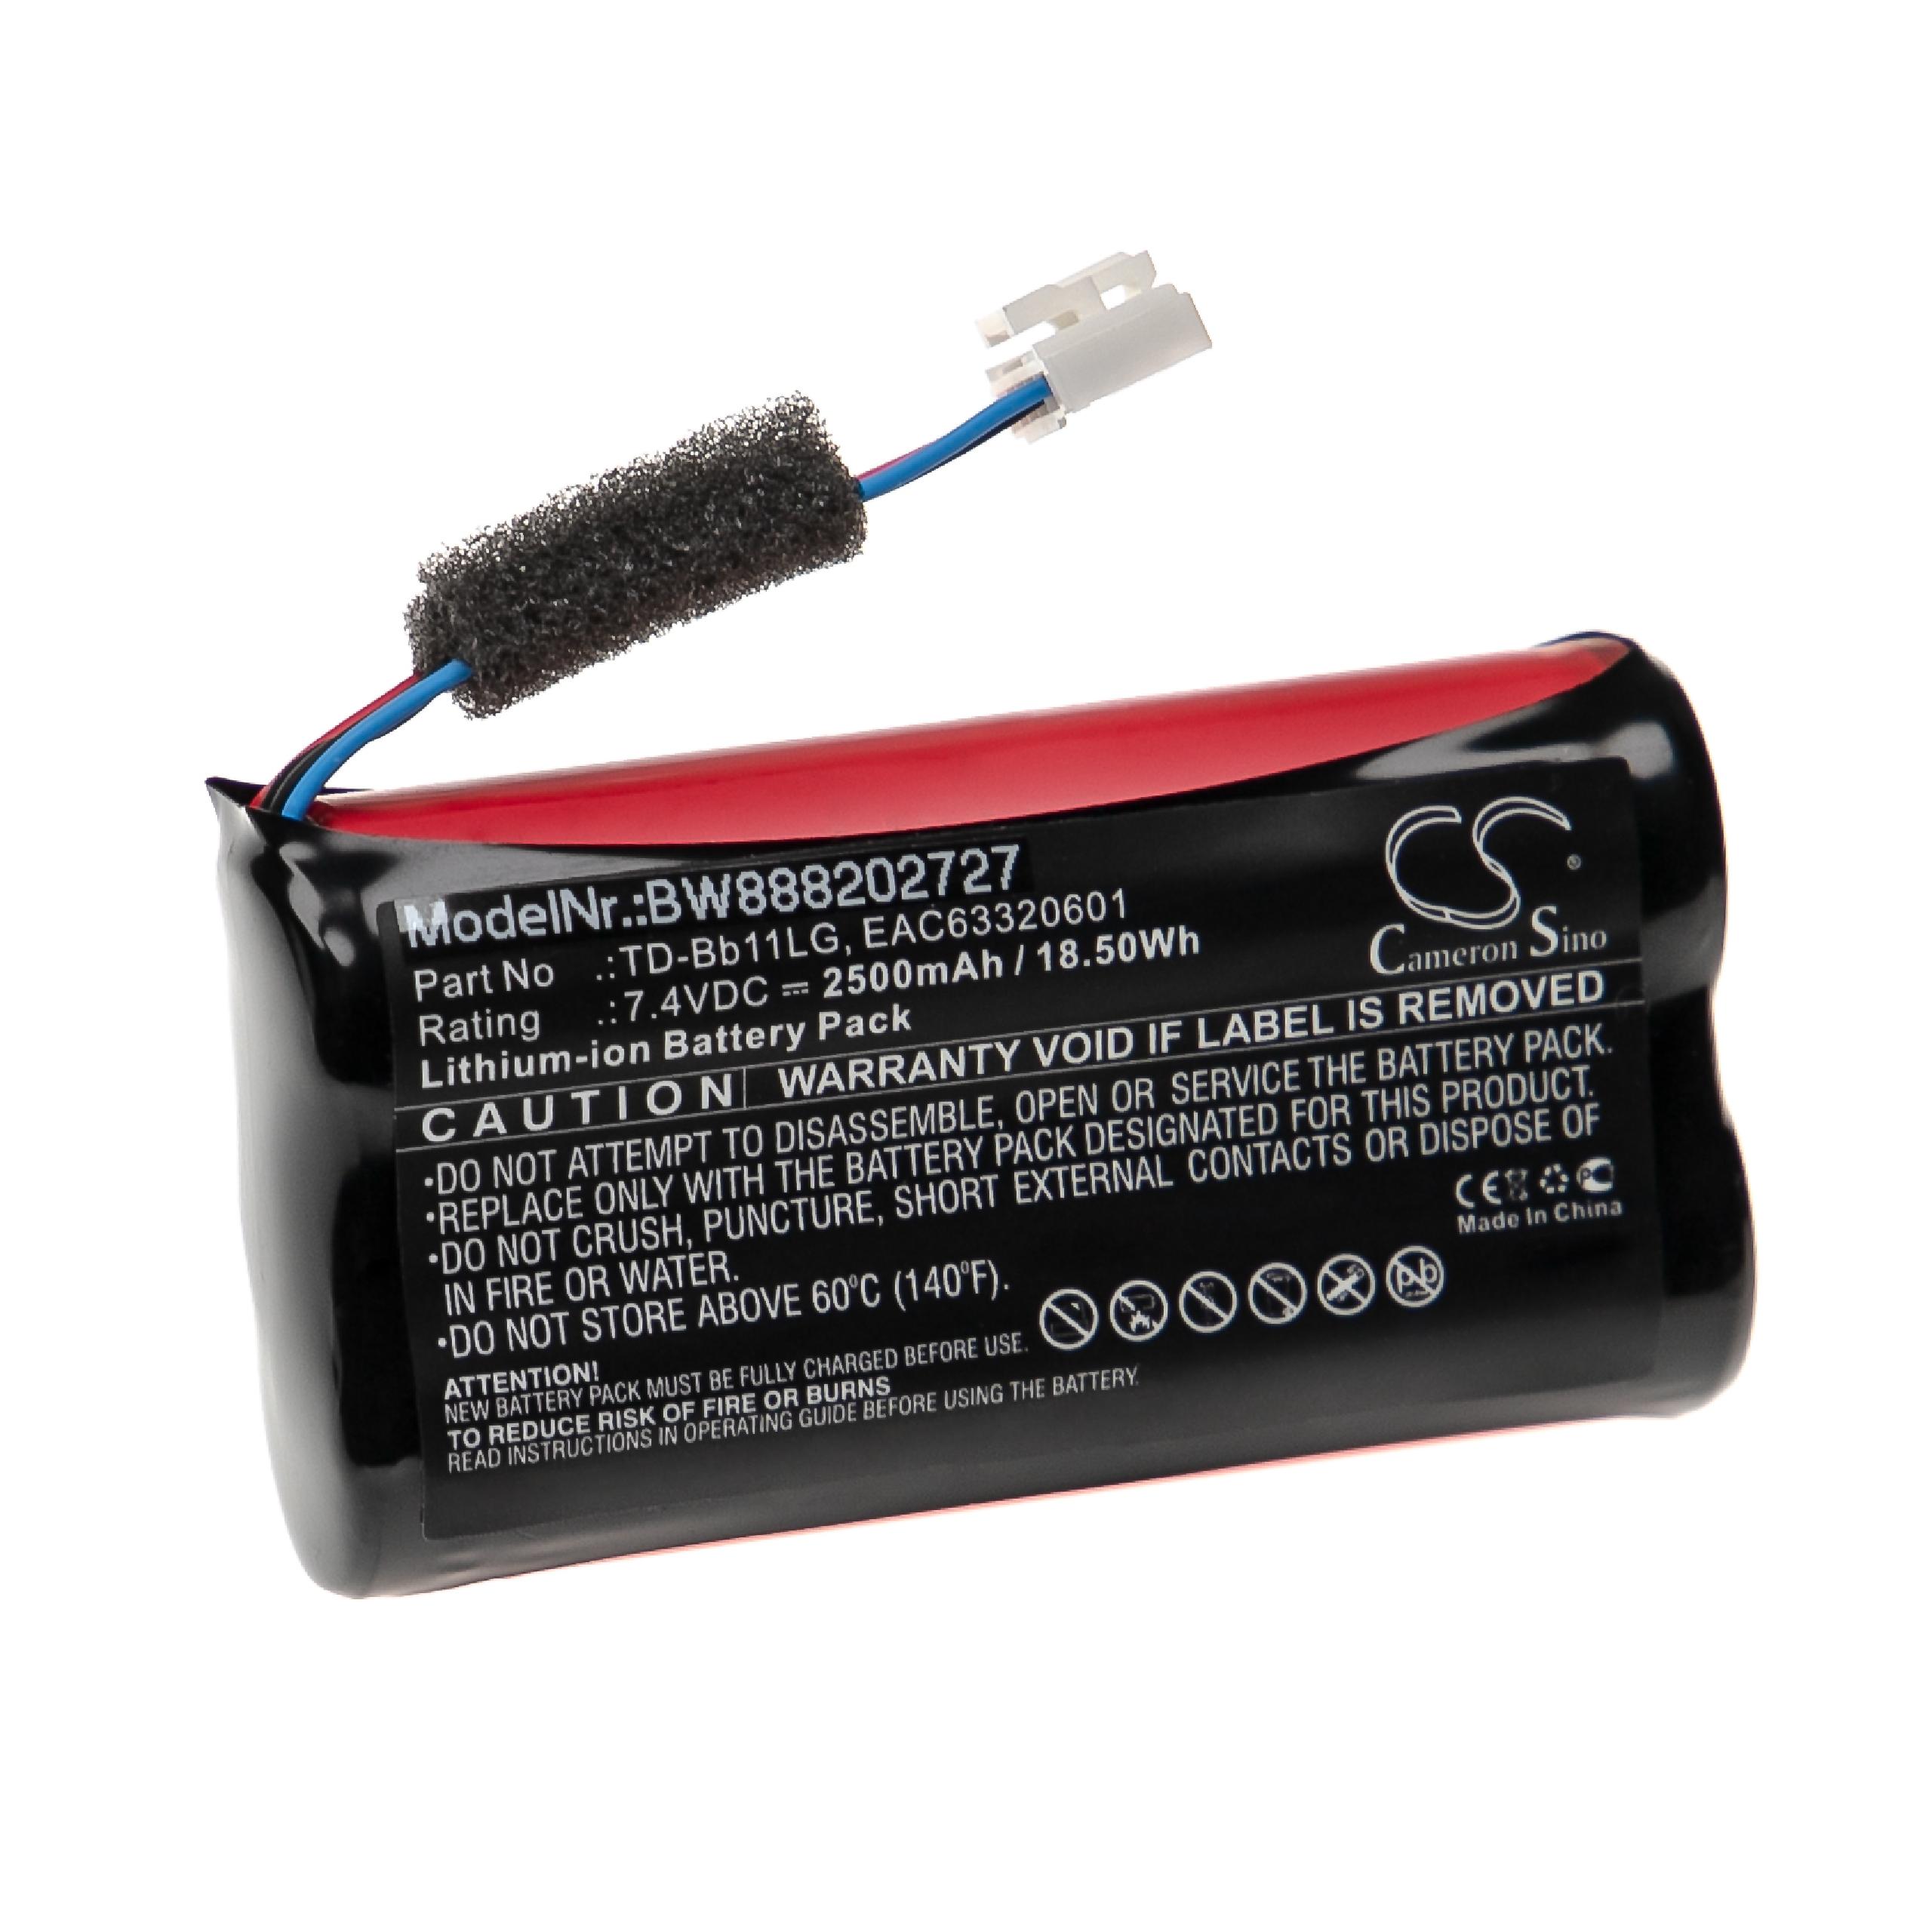  Battery replaces LG EAC63918901, EAC63320601, TD-Bb11 for LGLoudspeaker - Li-Ion 2500 mAh